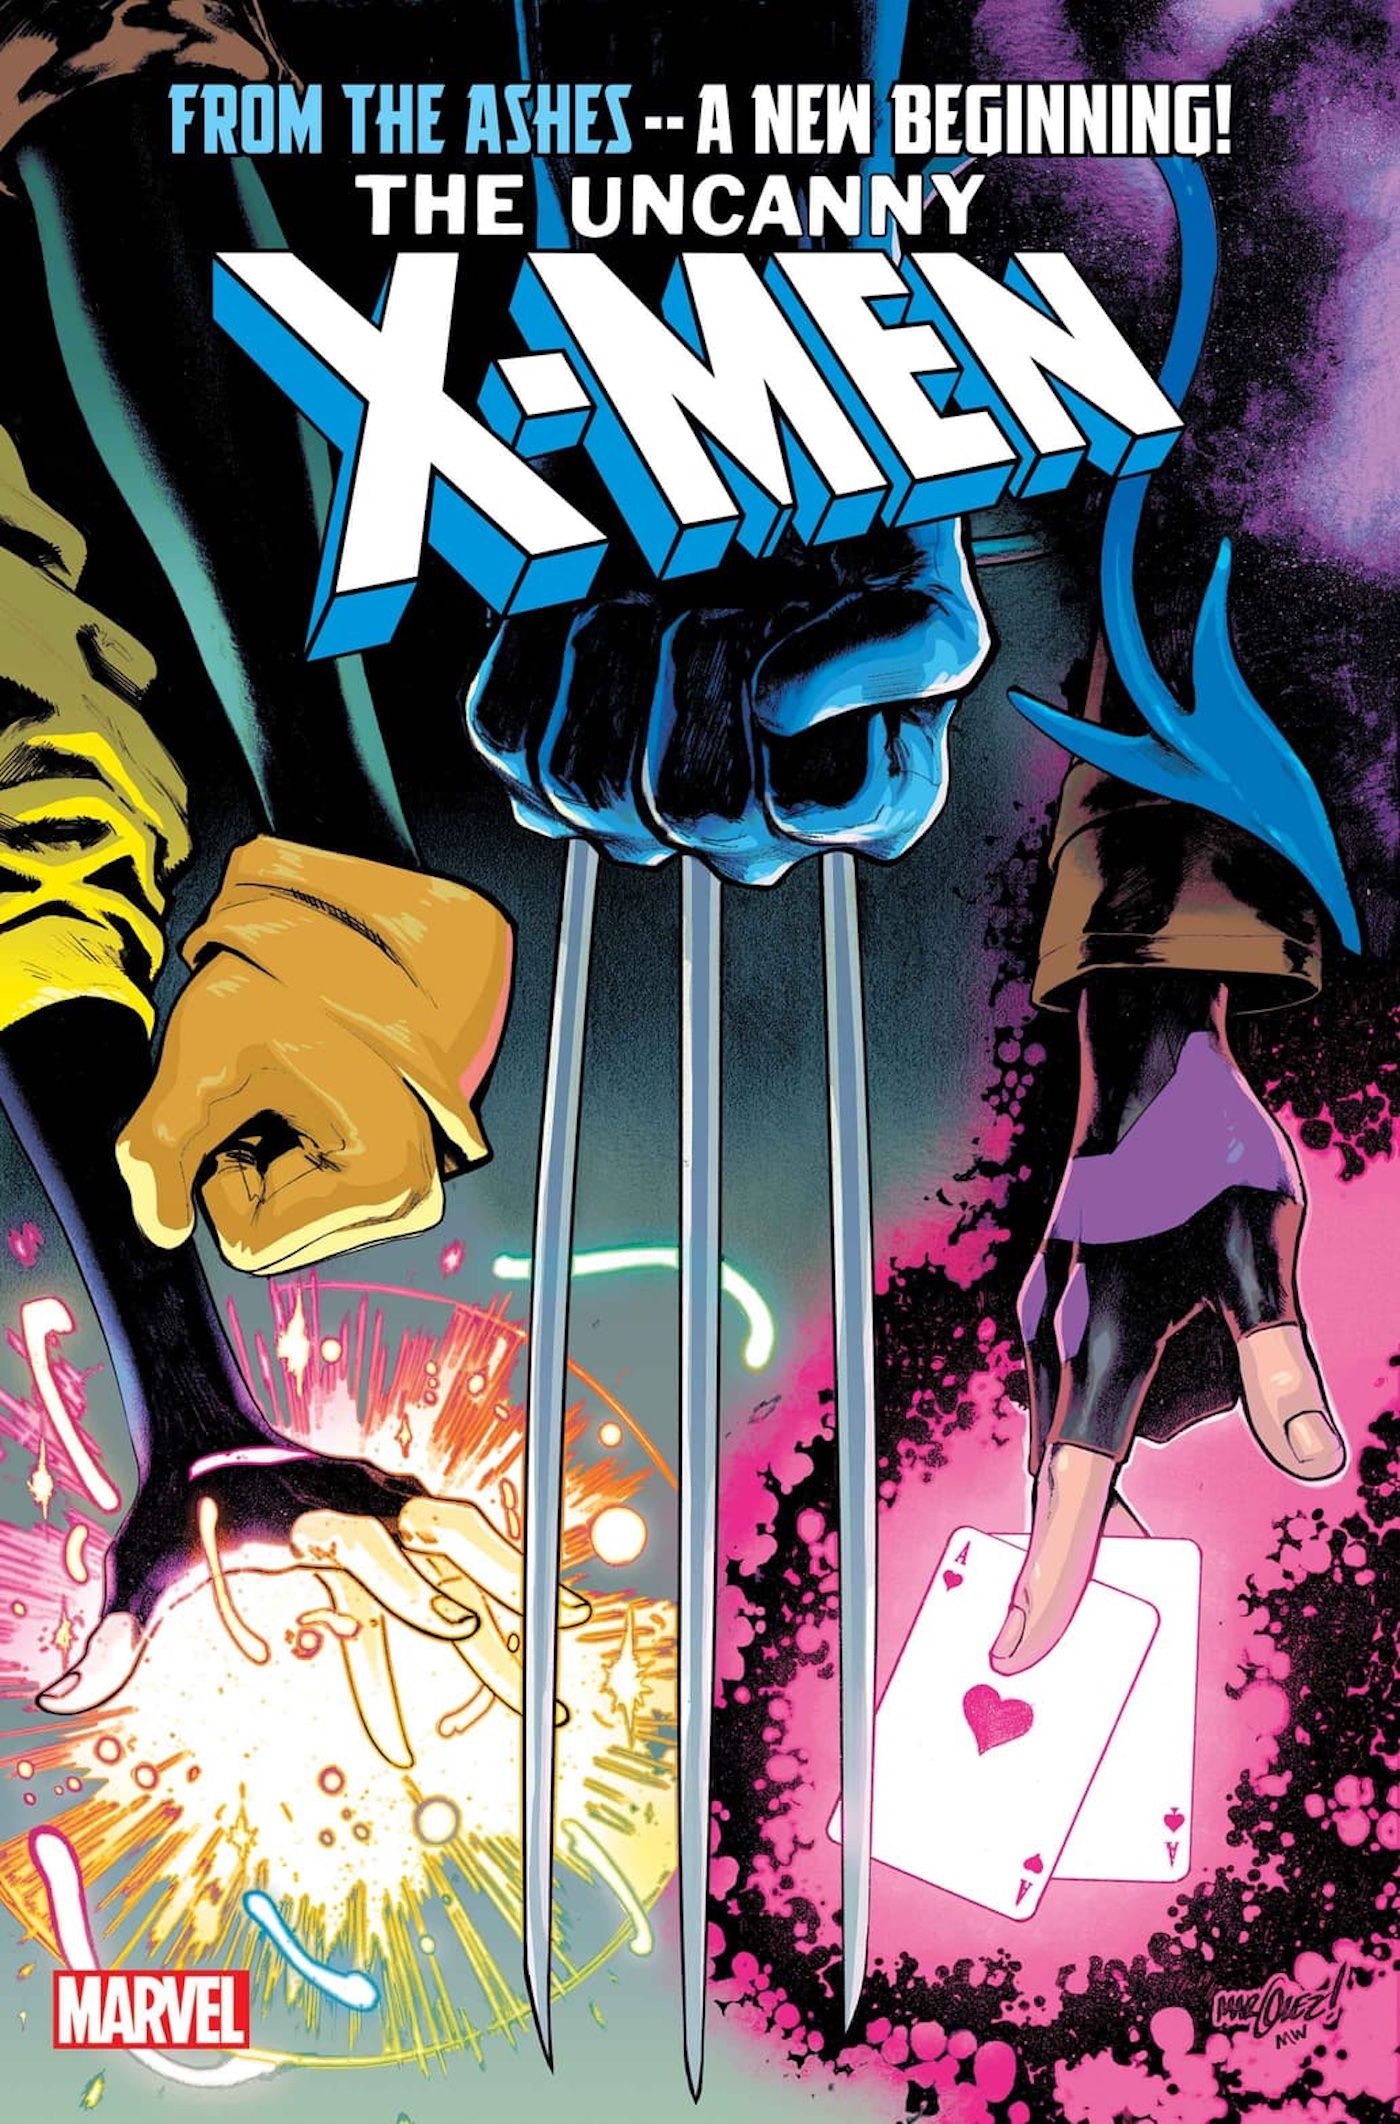 Capa de Uncanny X-Men 1 Márquez